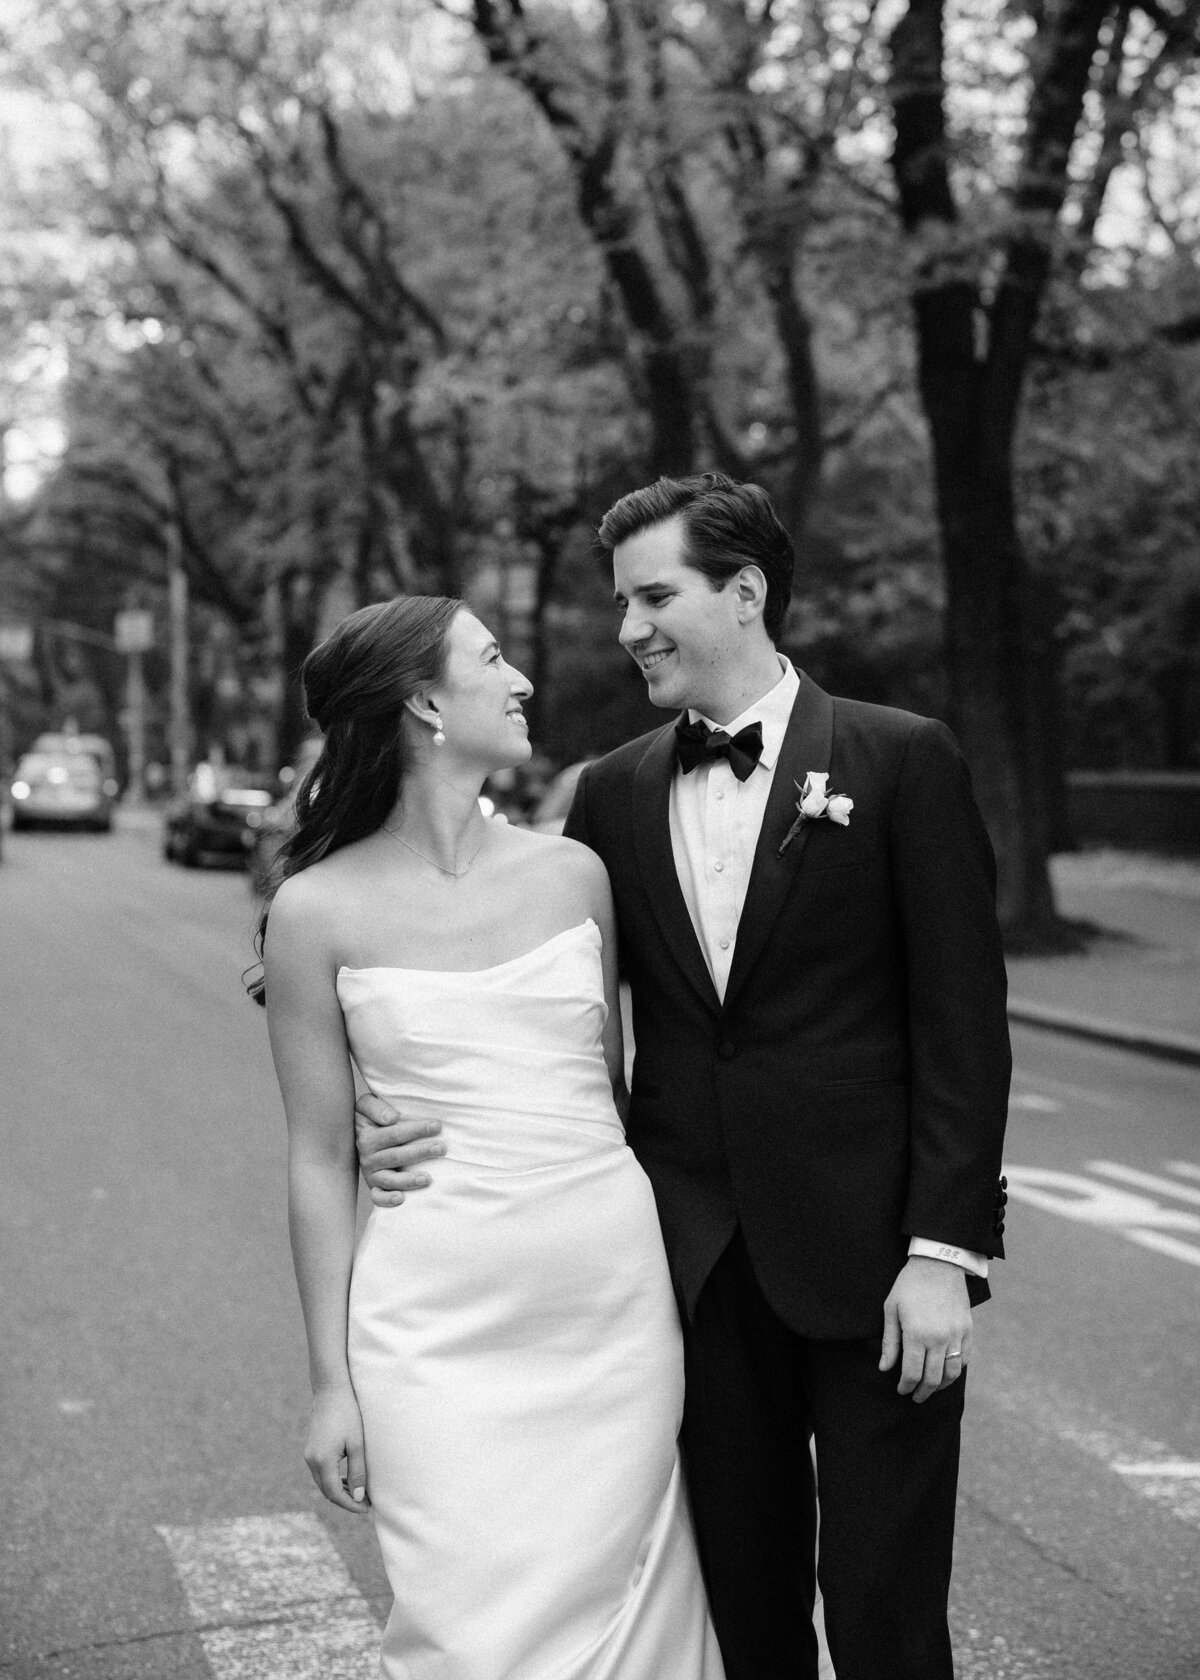 New York City wedding photographer